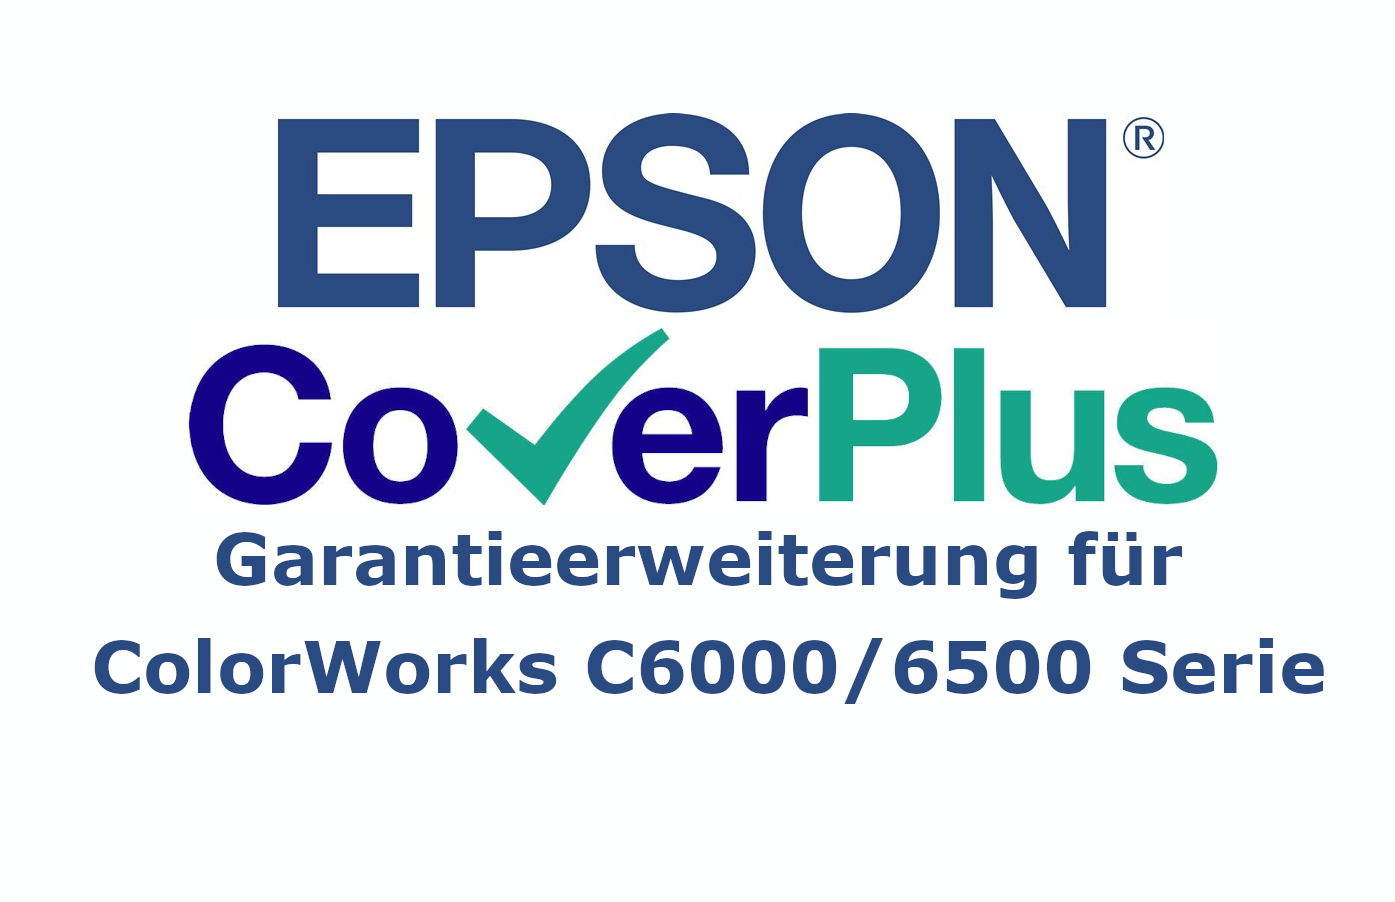 Obrázek EPSON ColorWorks Series C6000/6500 - CoverPlus